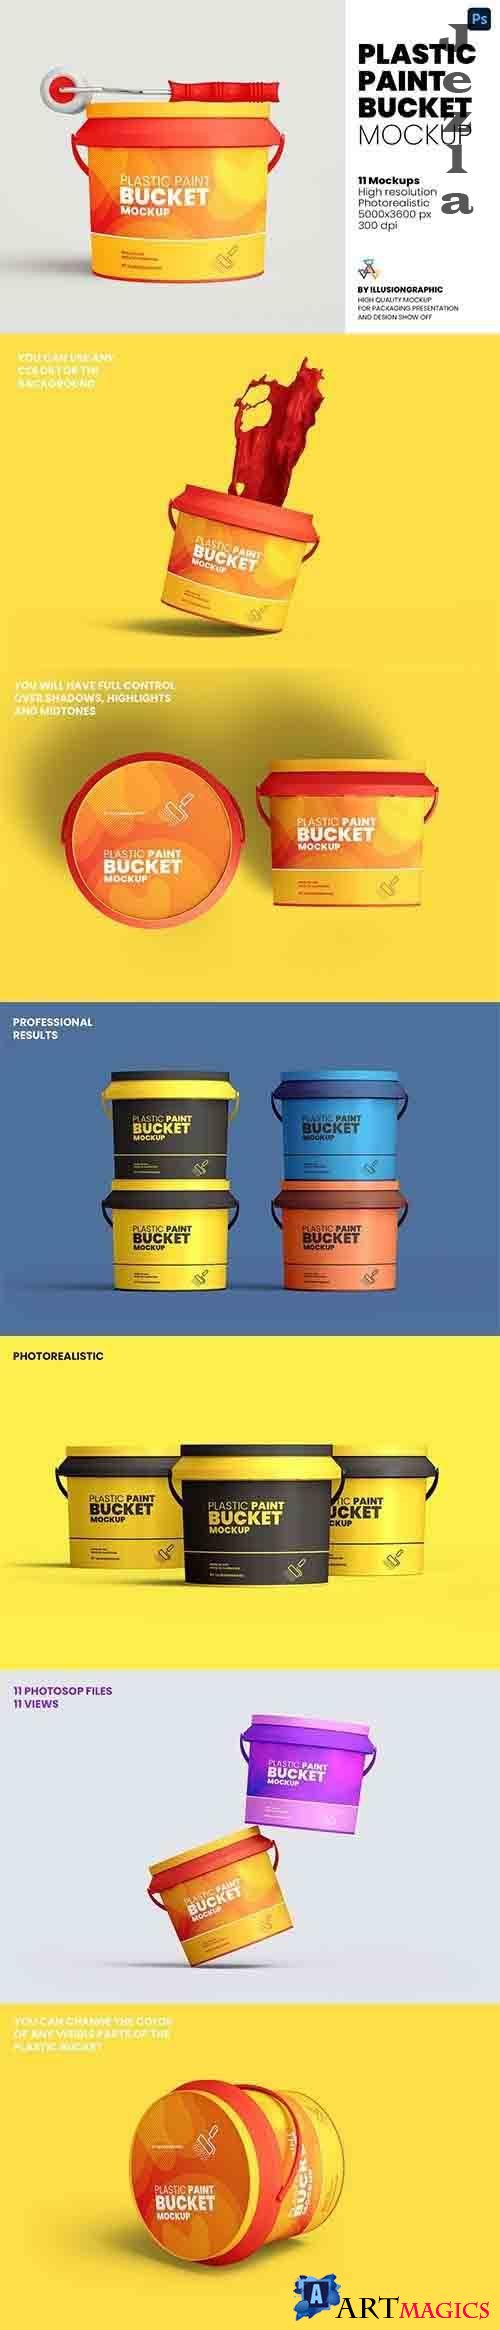 CreativeMarket - Plastic Paint Bucket Mockup 5976024